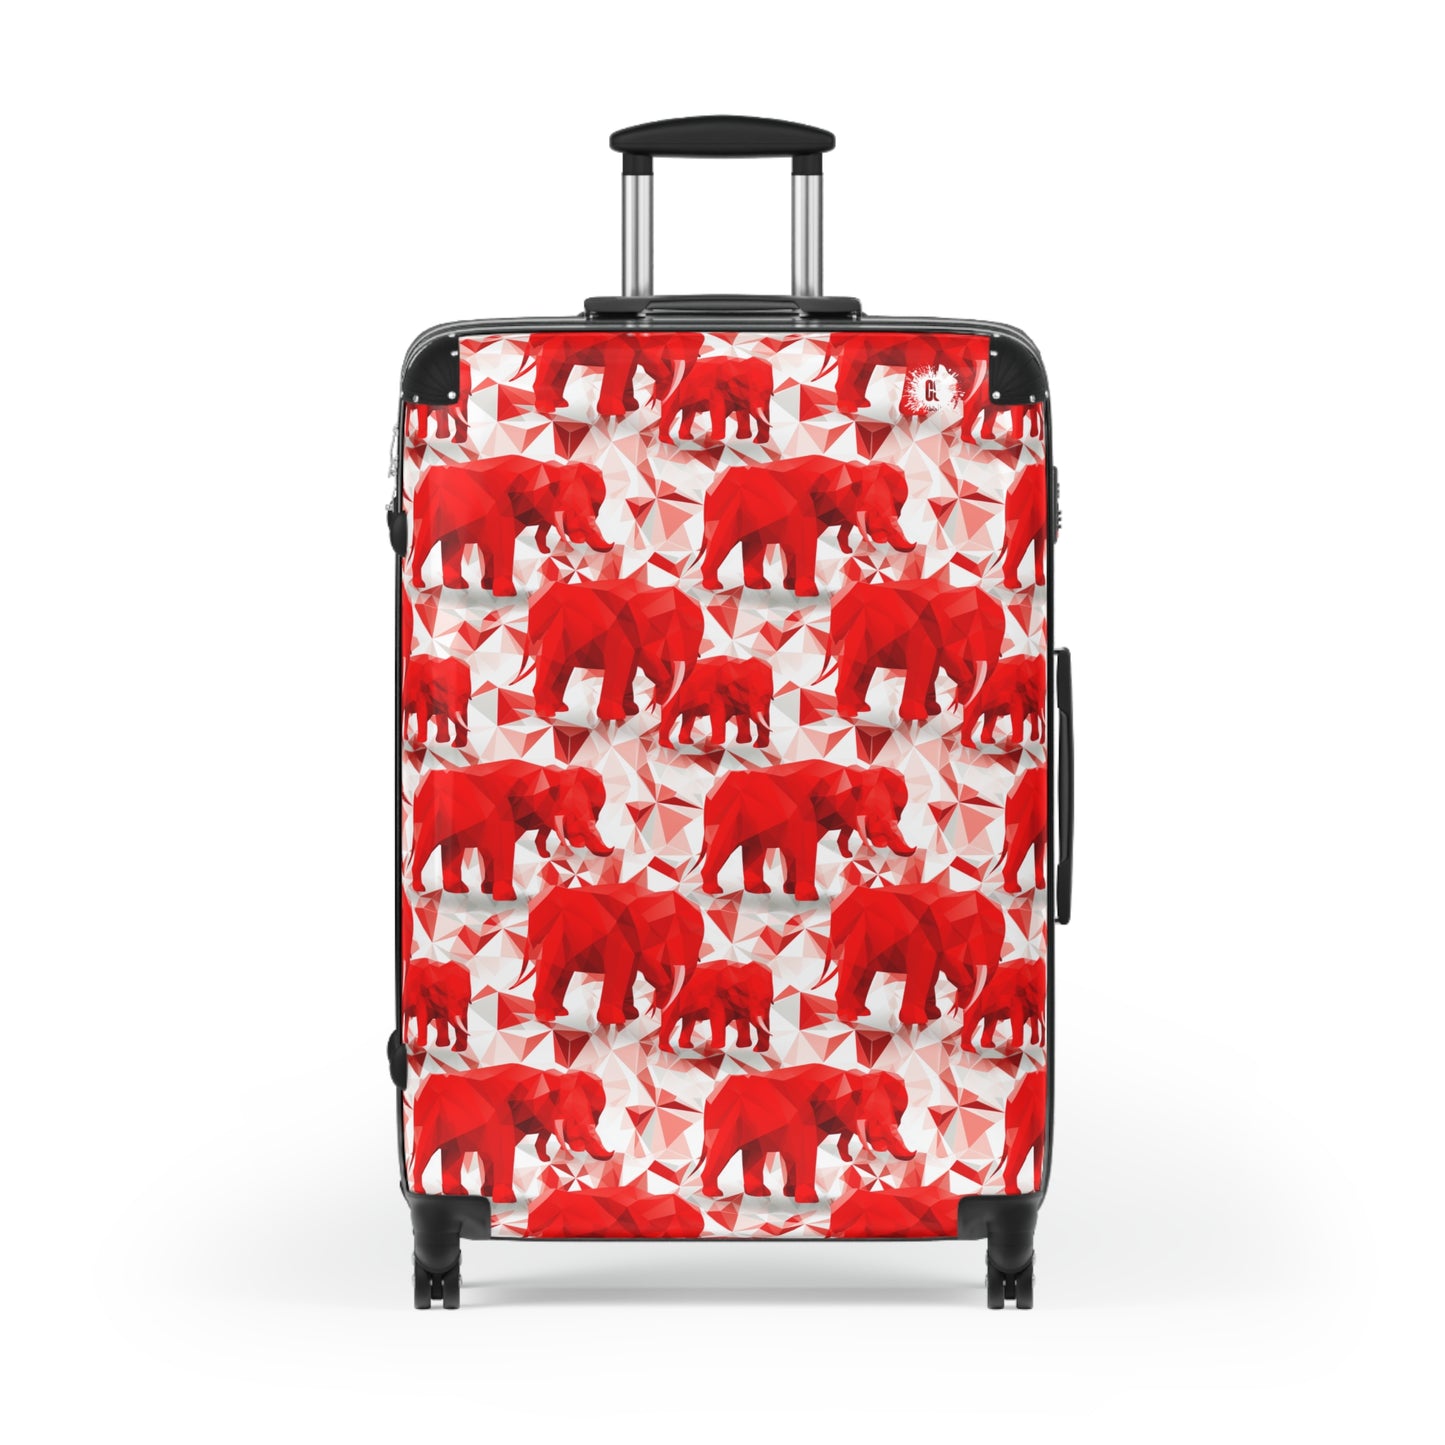 Elephants & Pyramids Suitcase